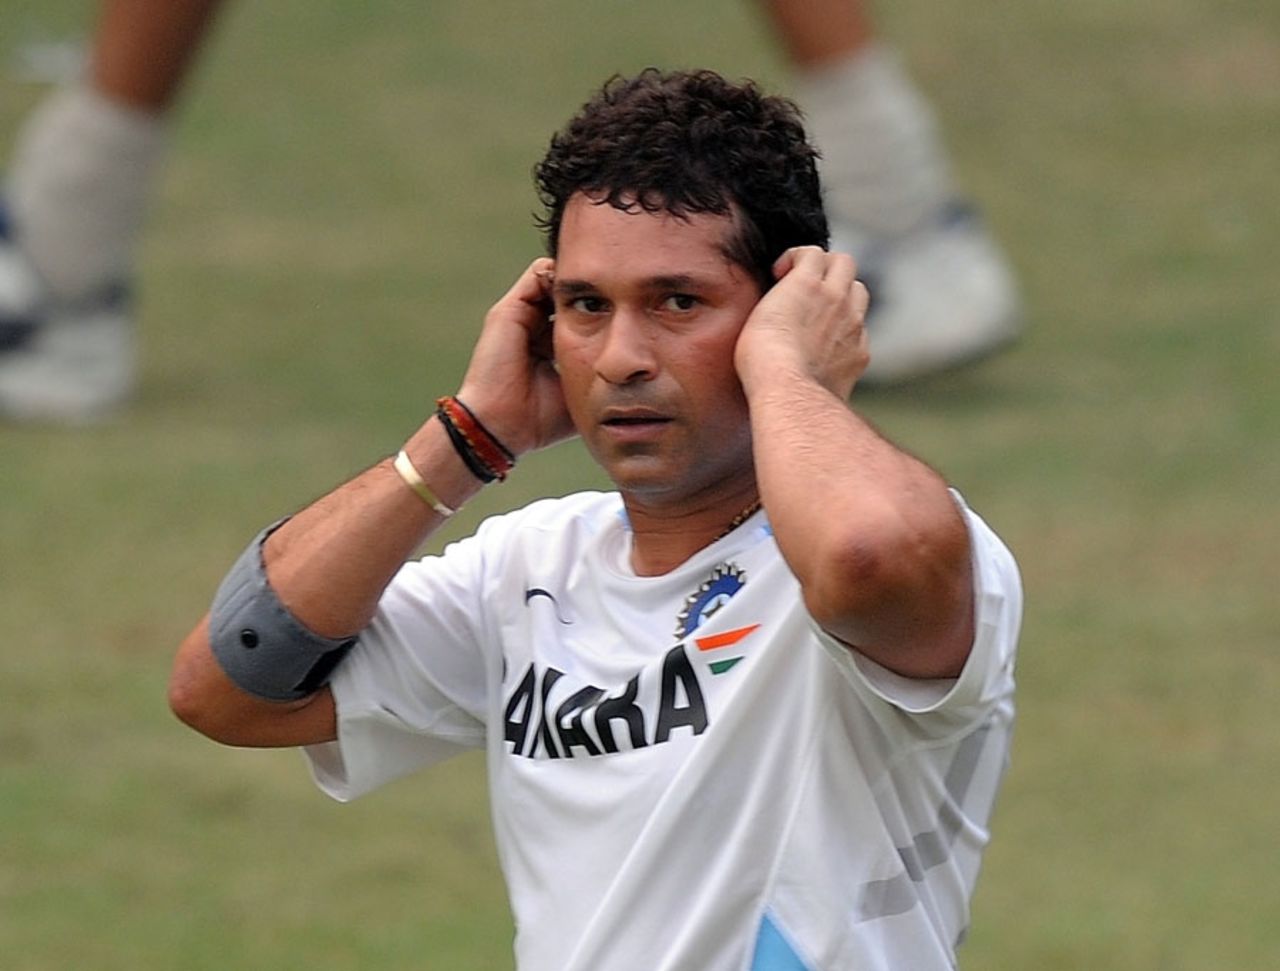 Sachin Tendulkar gestures by covering his ears during practice, Delhi, November 4, 2011